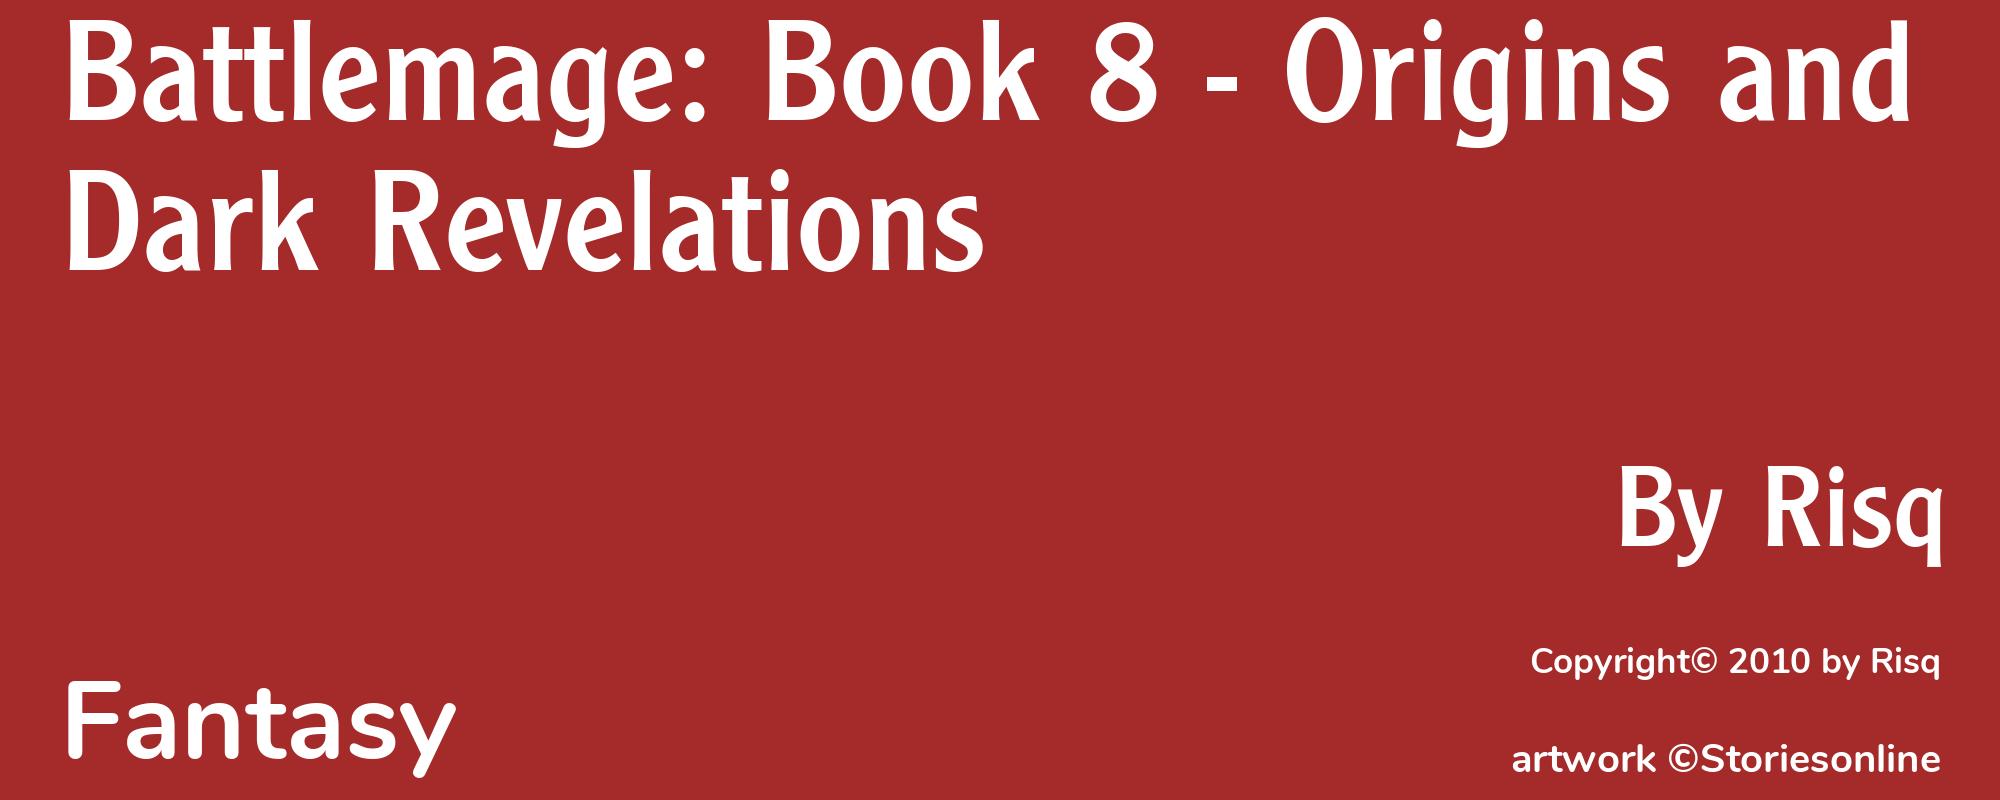 Battlemage: Book 8 - Origins and Dark Revelations - Cover